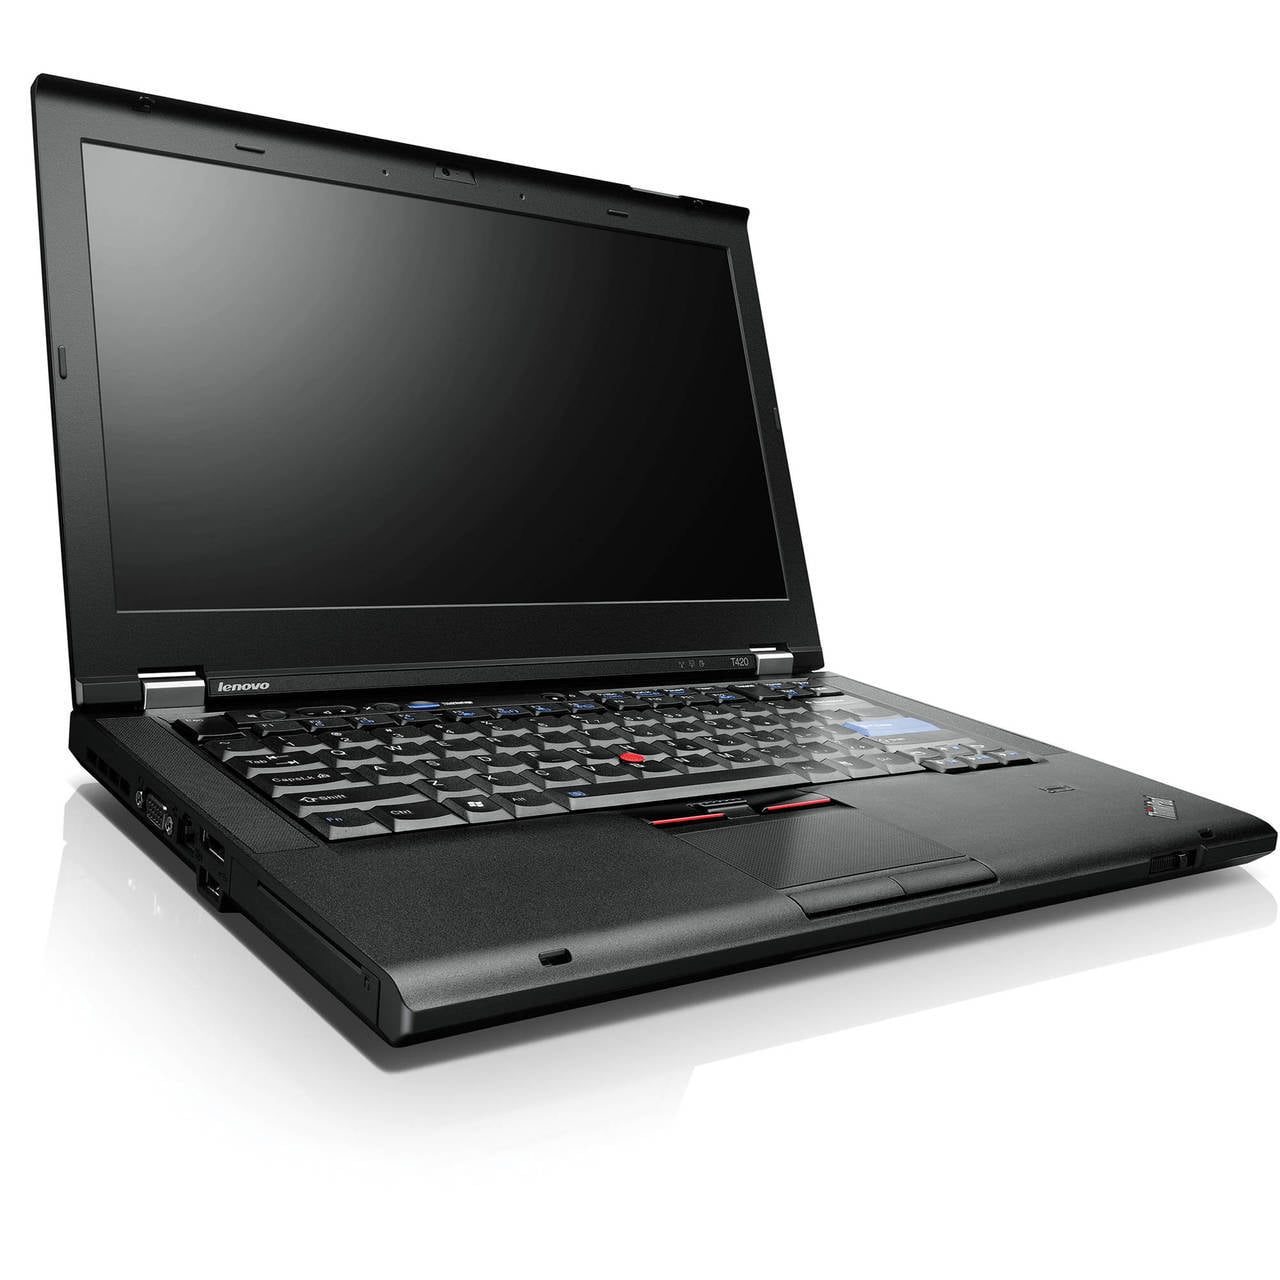 Shredded Lære udenad Aktiver Restored Lenovo ThinkPad T420 Laptop i5-2520M 2.50GHz 8GB RAM 320GB HDD Win  10 Home (Refurbished) - Walmart.com